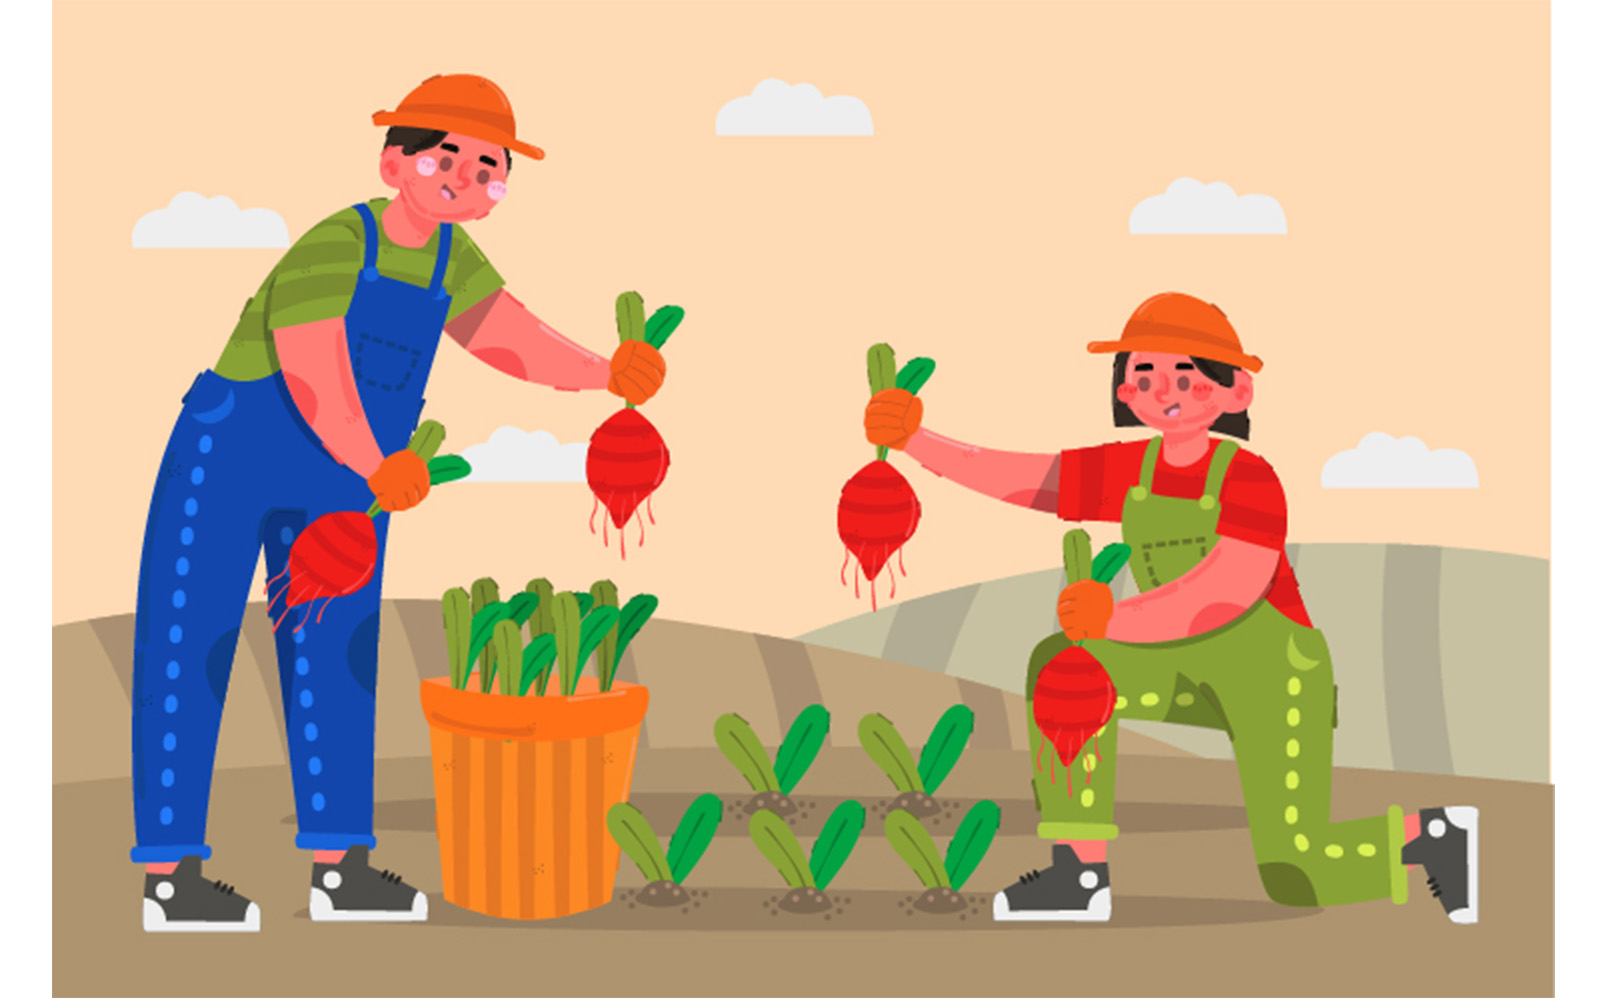 Farming Profession Background Illustration